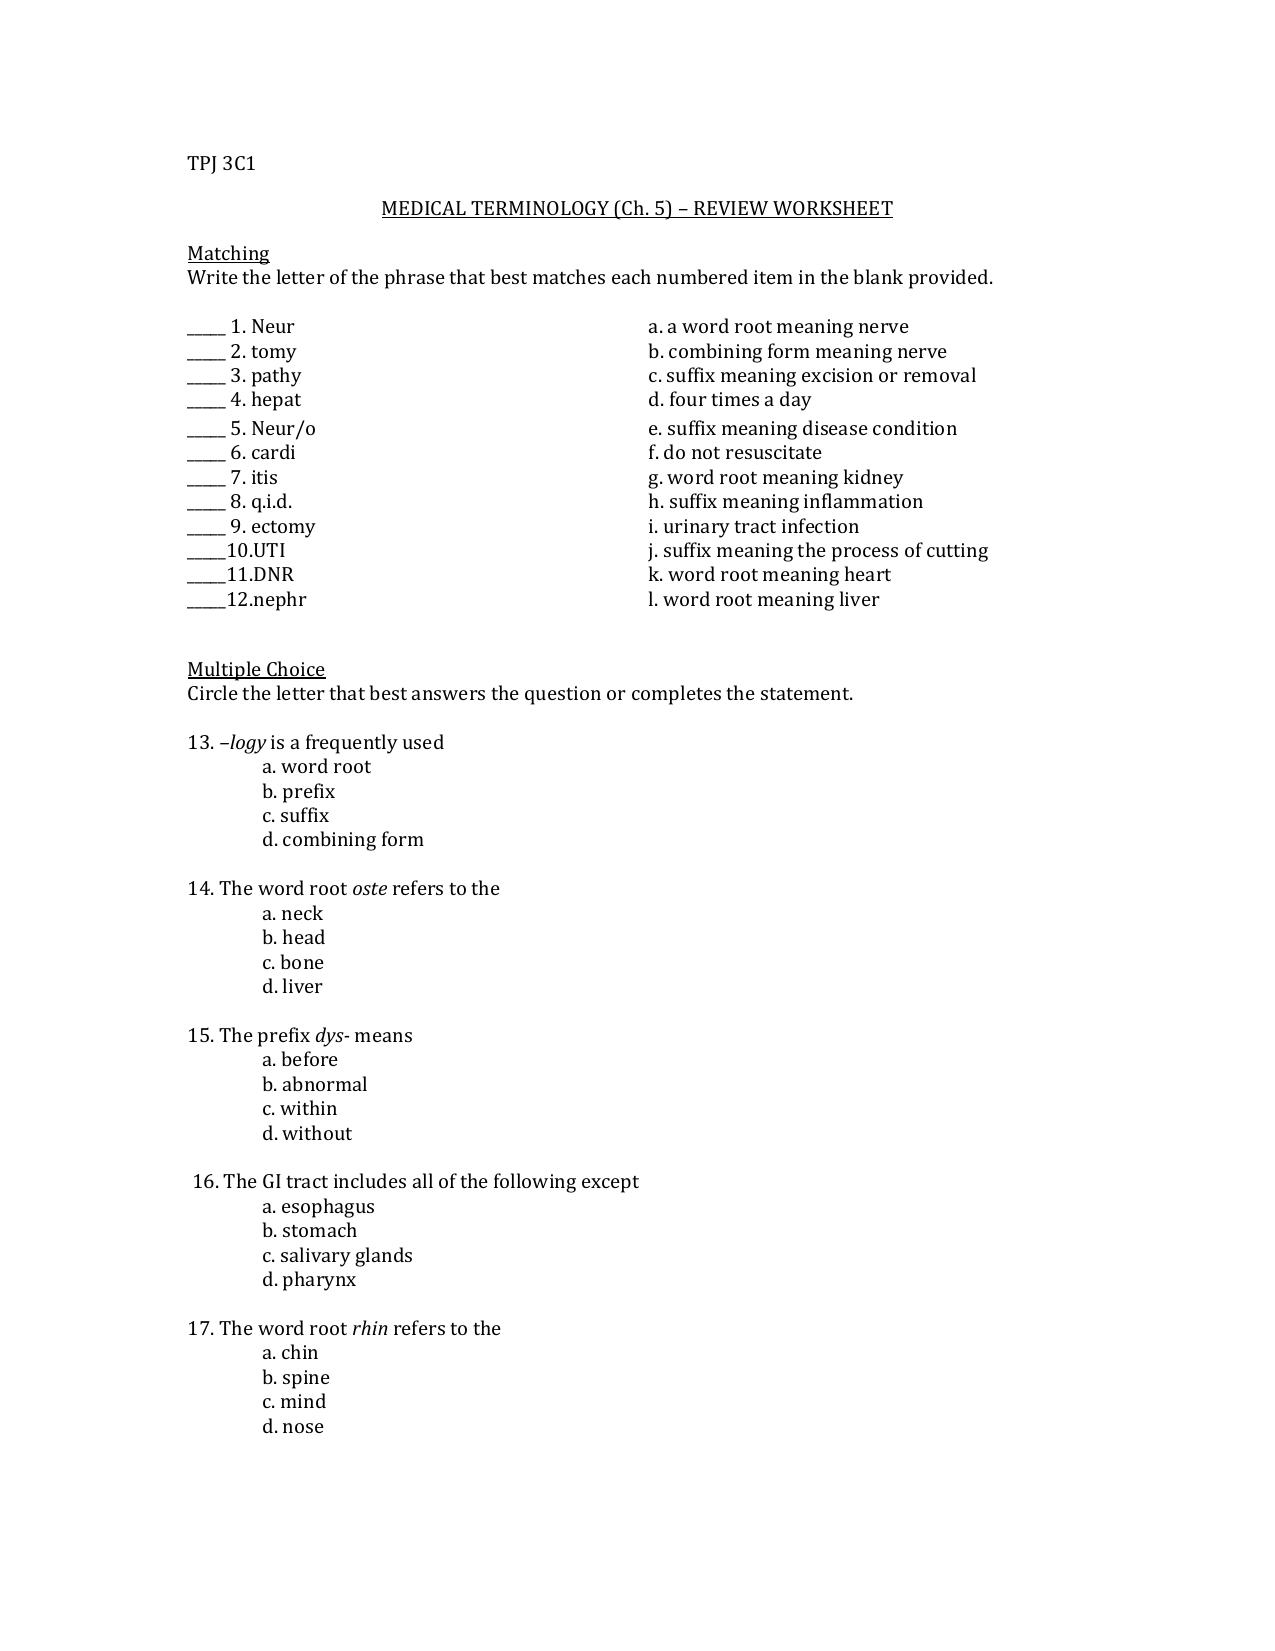 TPJ 20C20 Chapter 20 Review Worksheet For Medical Terminology Prefixes Worksheet